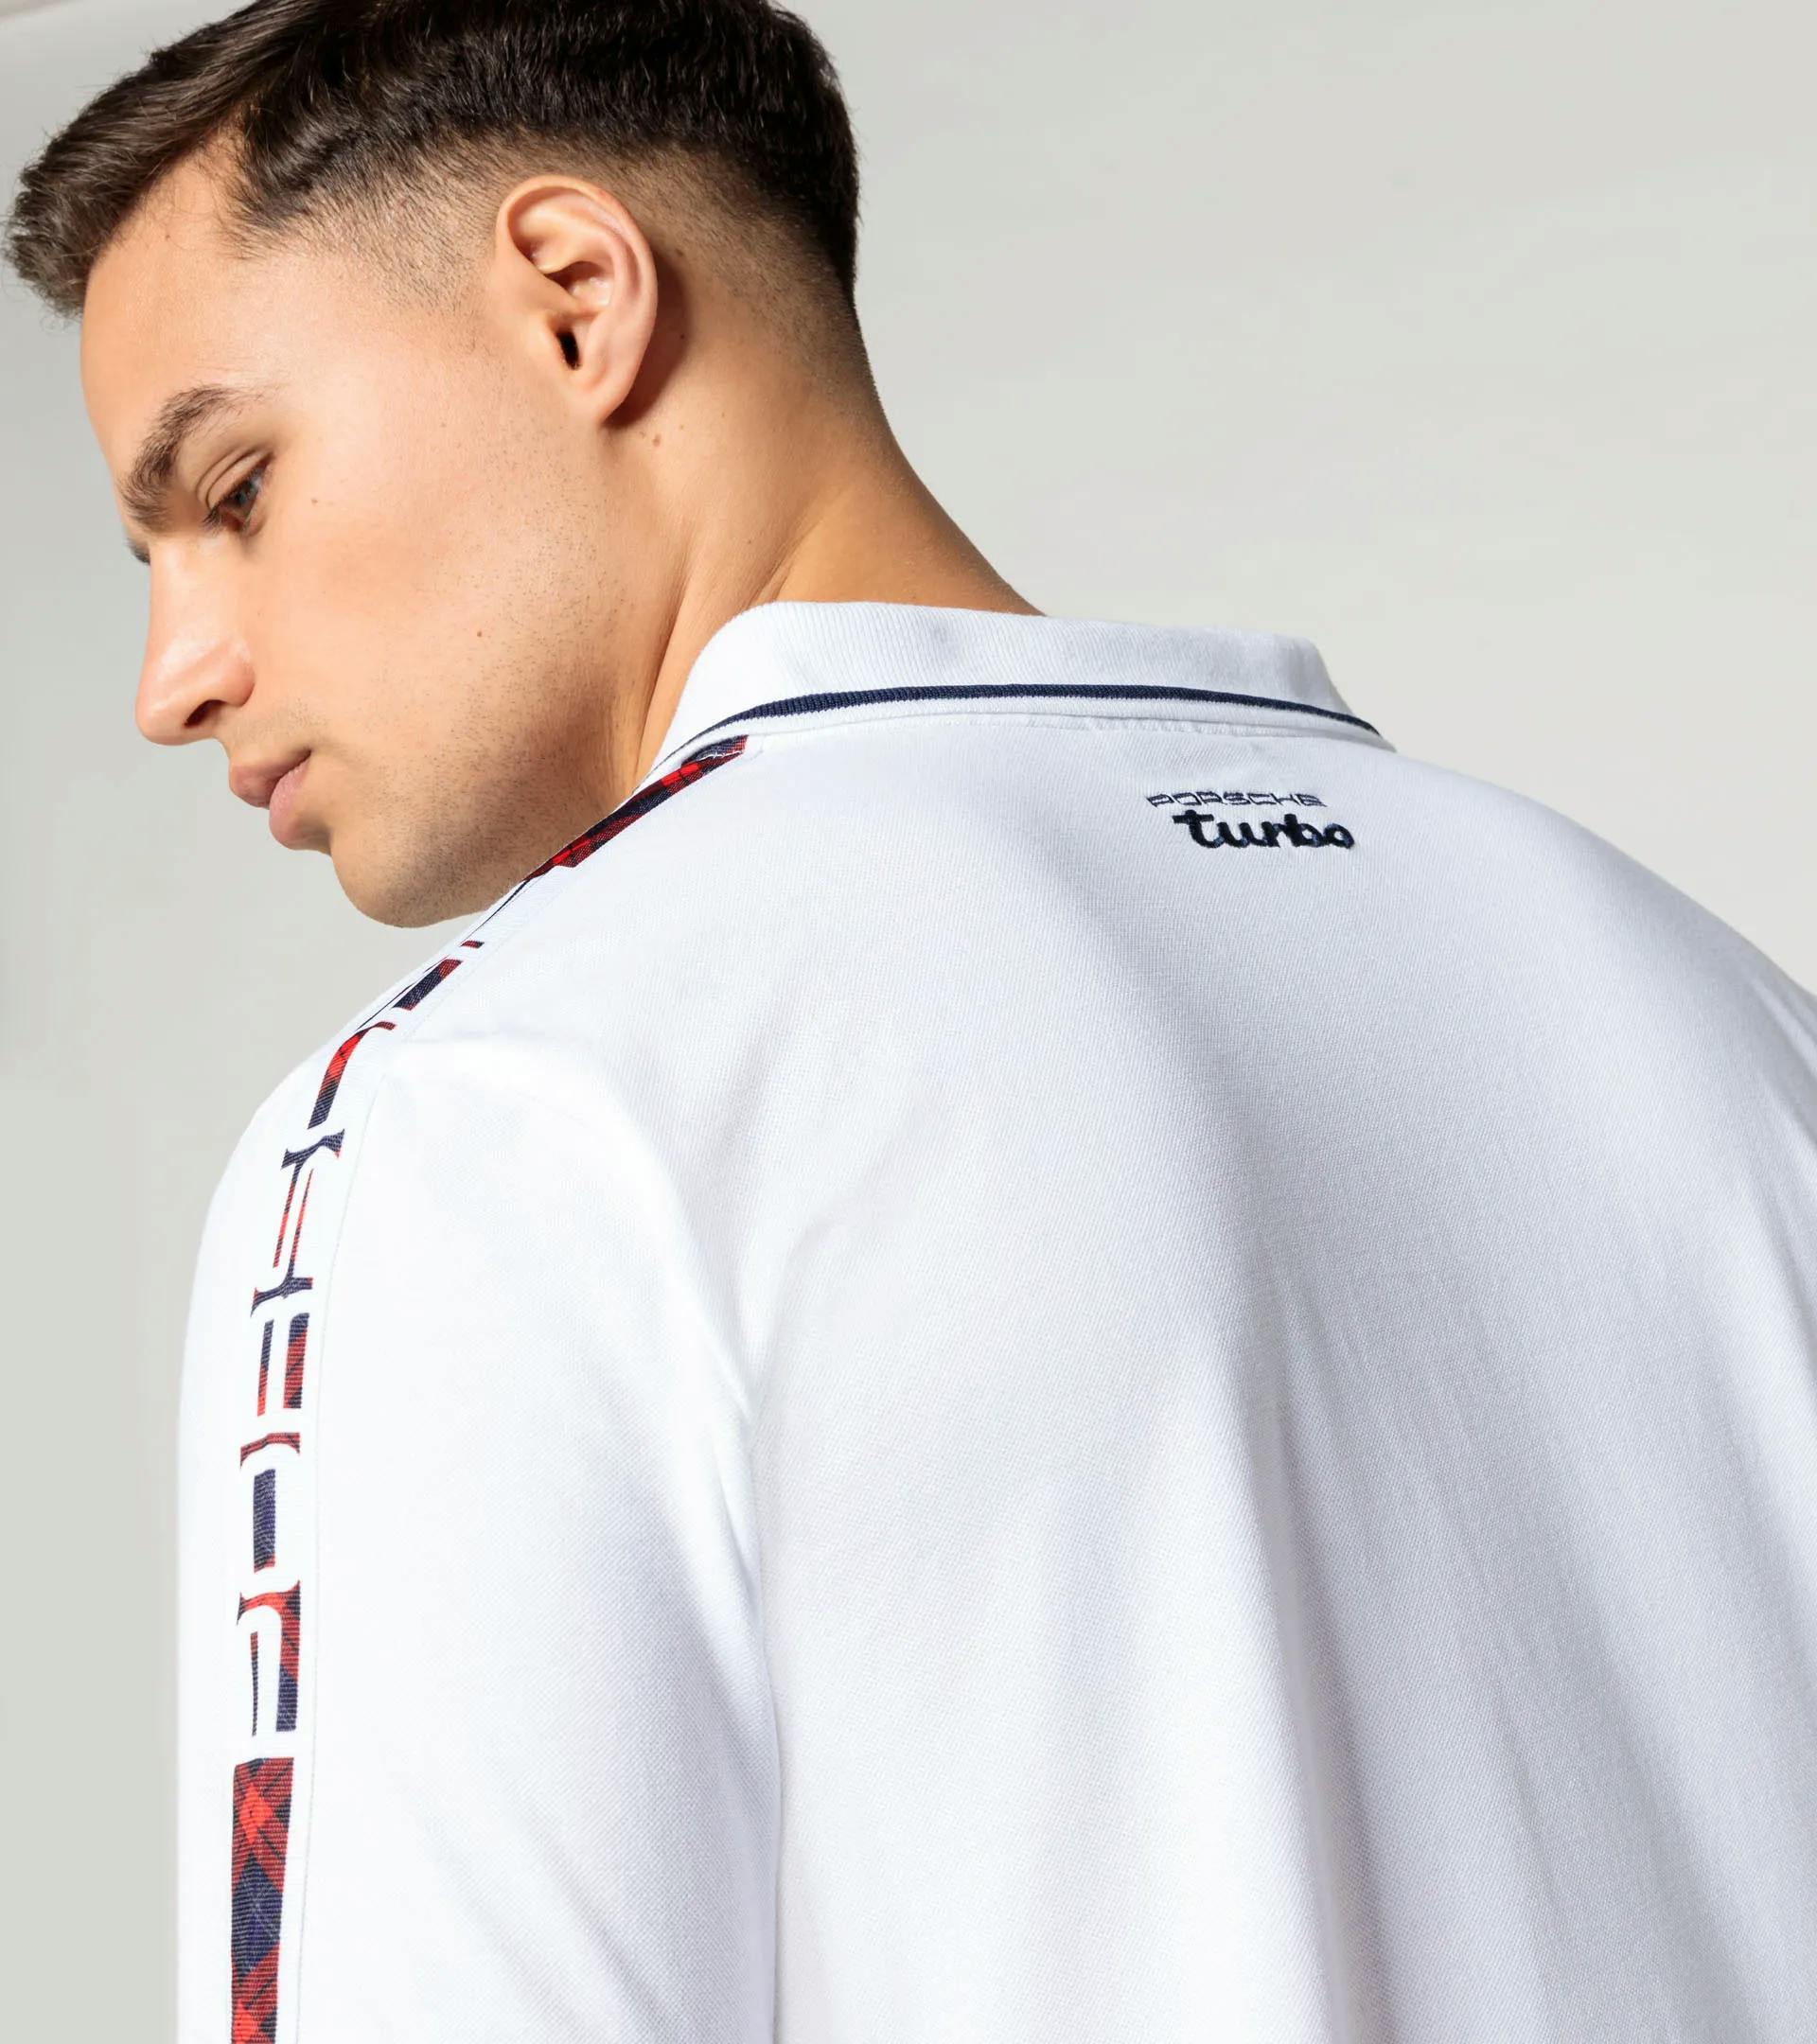 Polo shirt – Turbo No. 1 7